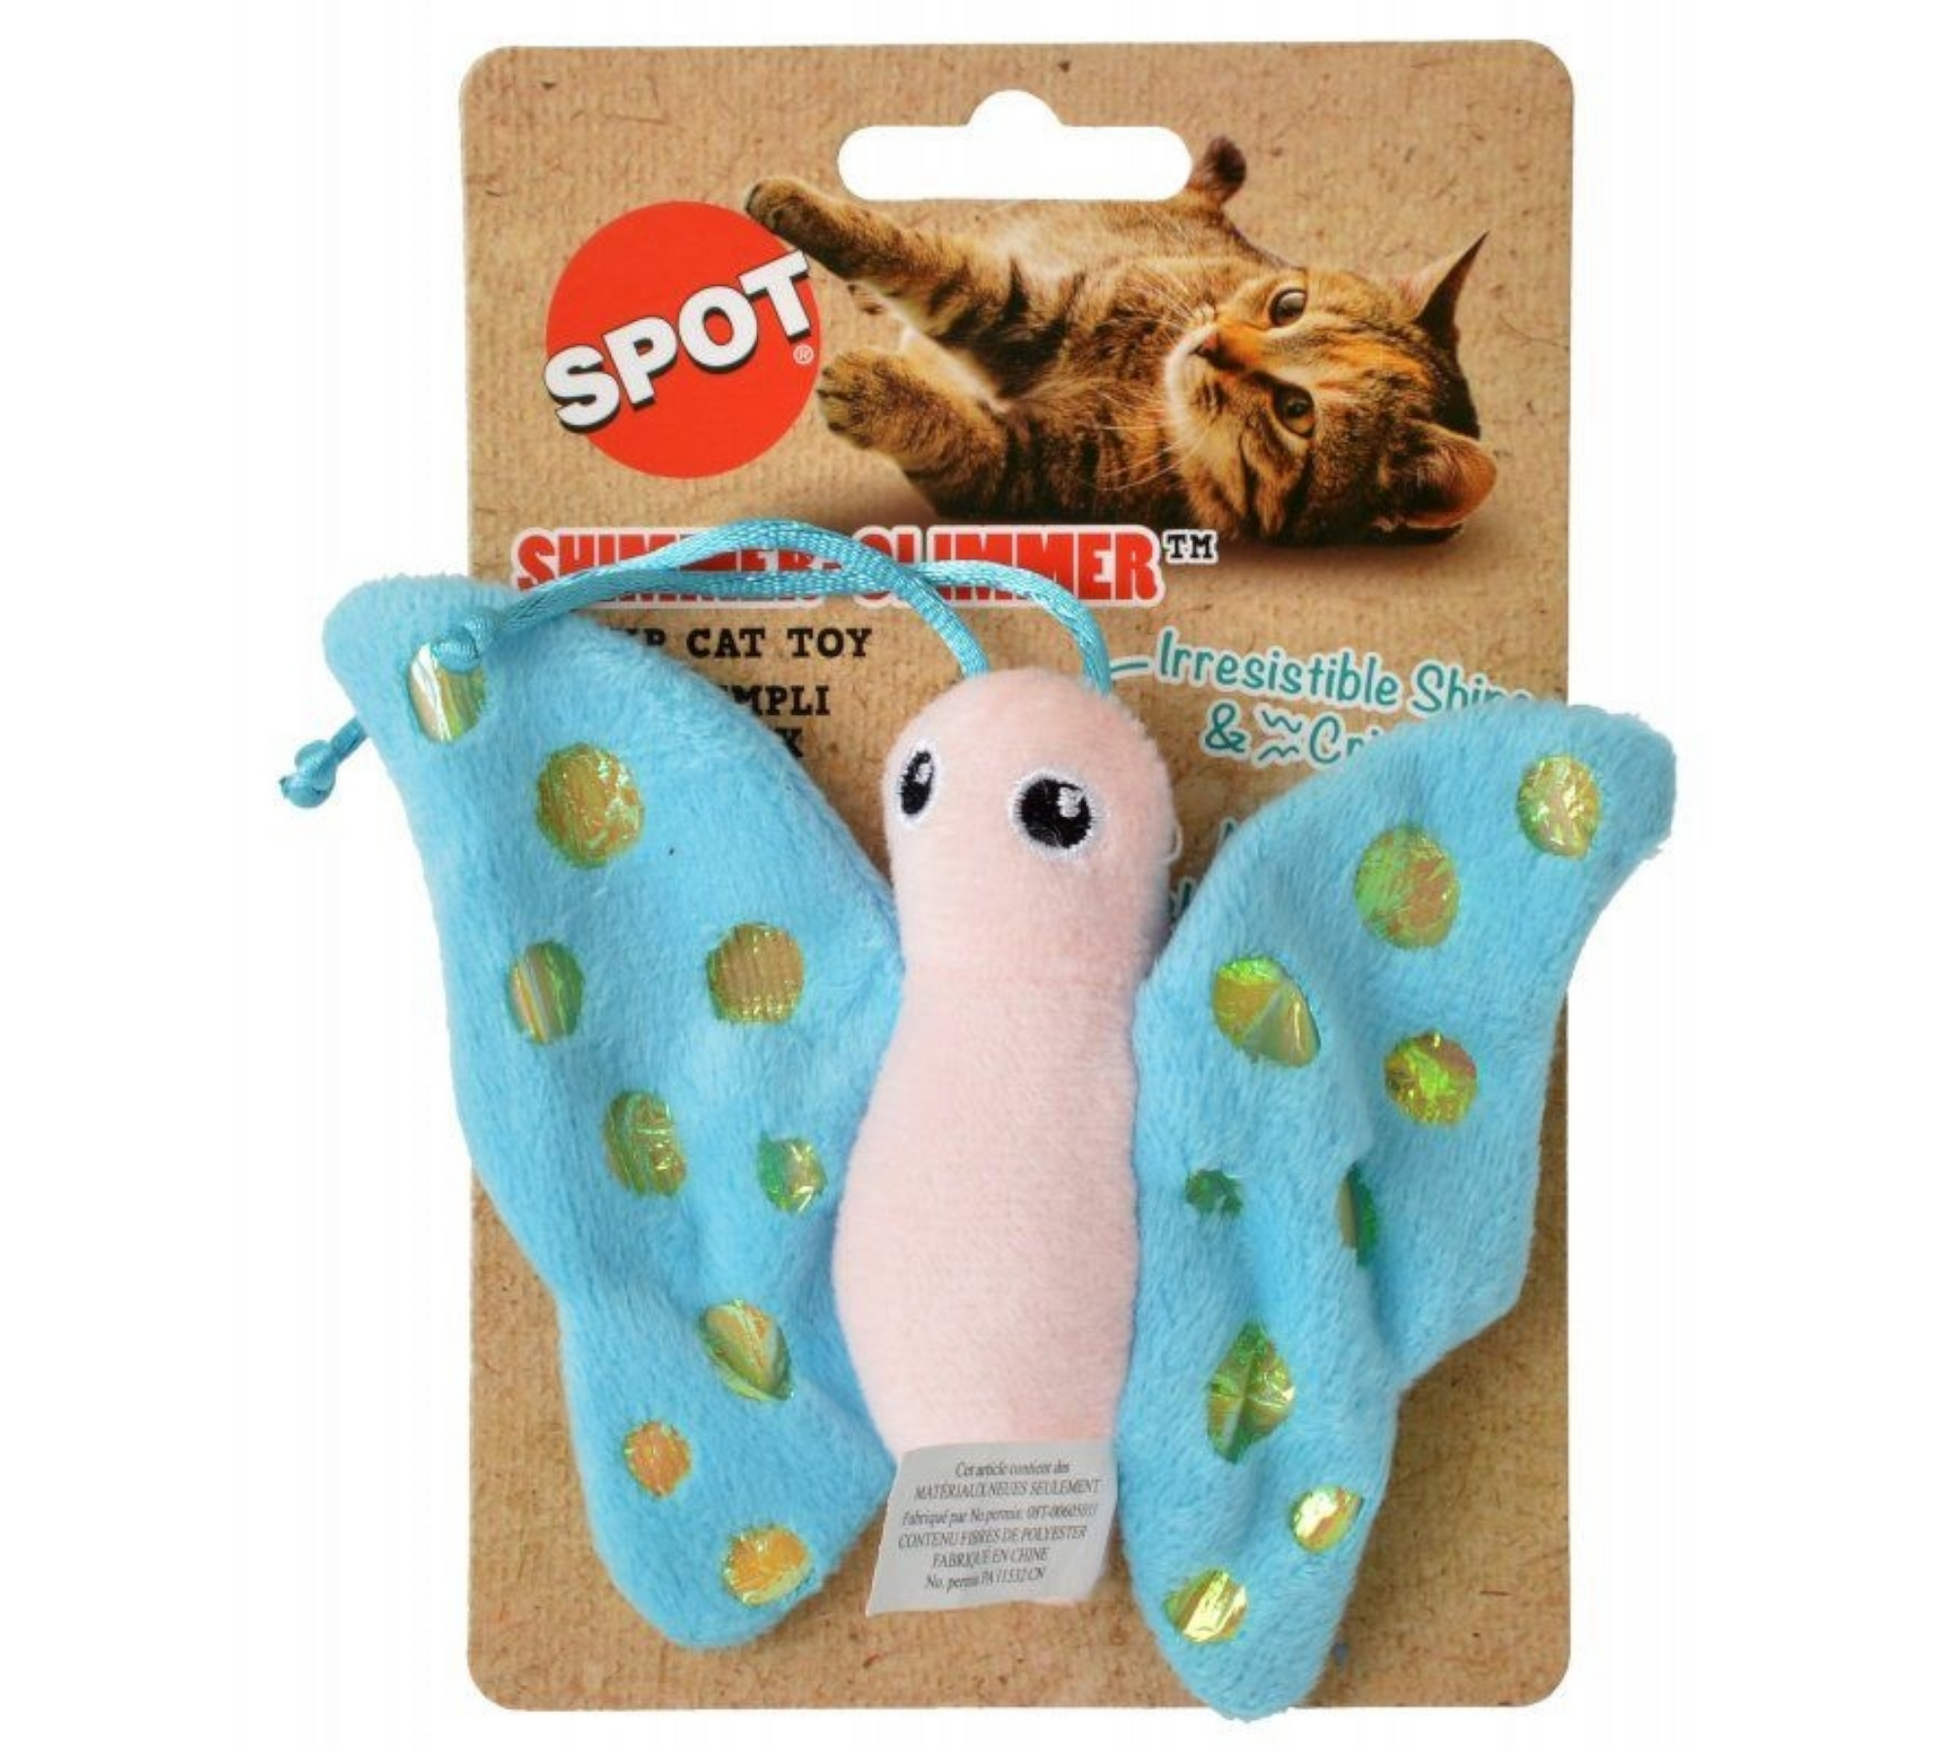 Canine's World Catnip Toys Spot Pet Shimmer Glimmer Butterfly & Catnip Cat Toy, Color Varies Spot